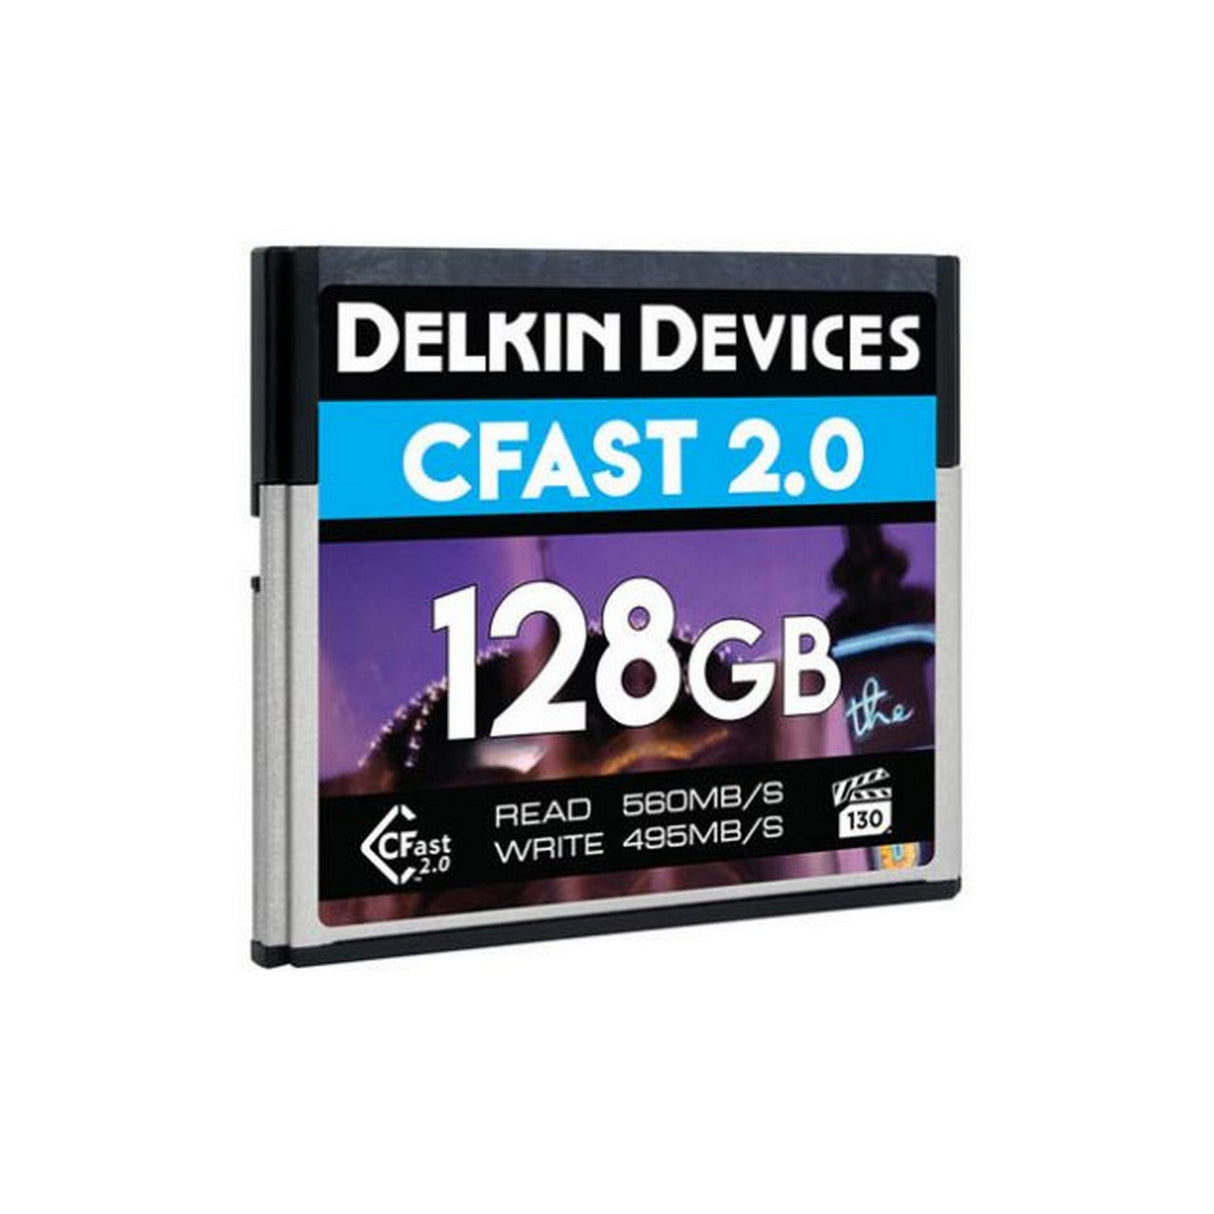 Delkin Devices CFast 2.0 Memory Card, VPG-130, 128GB